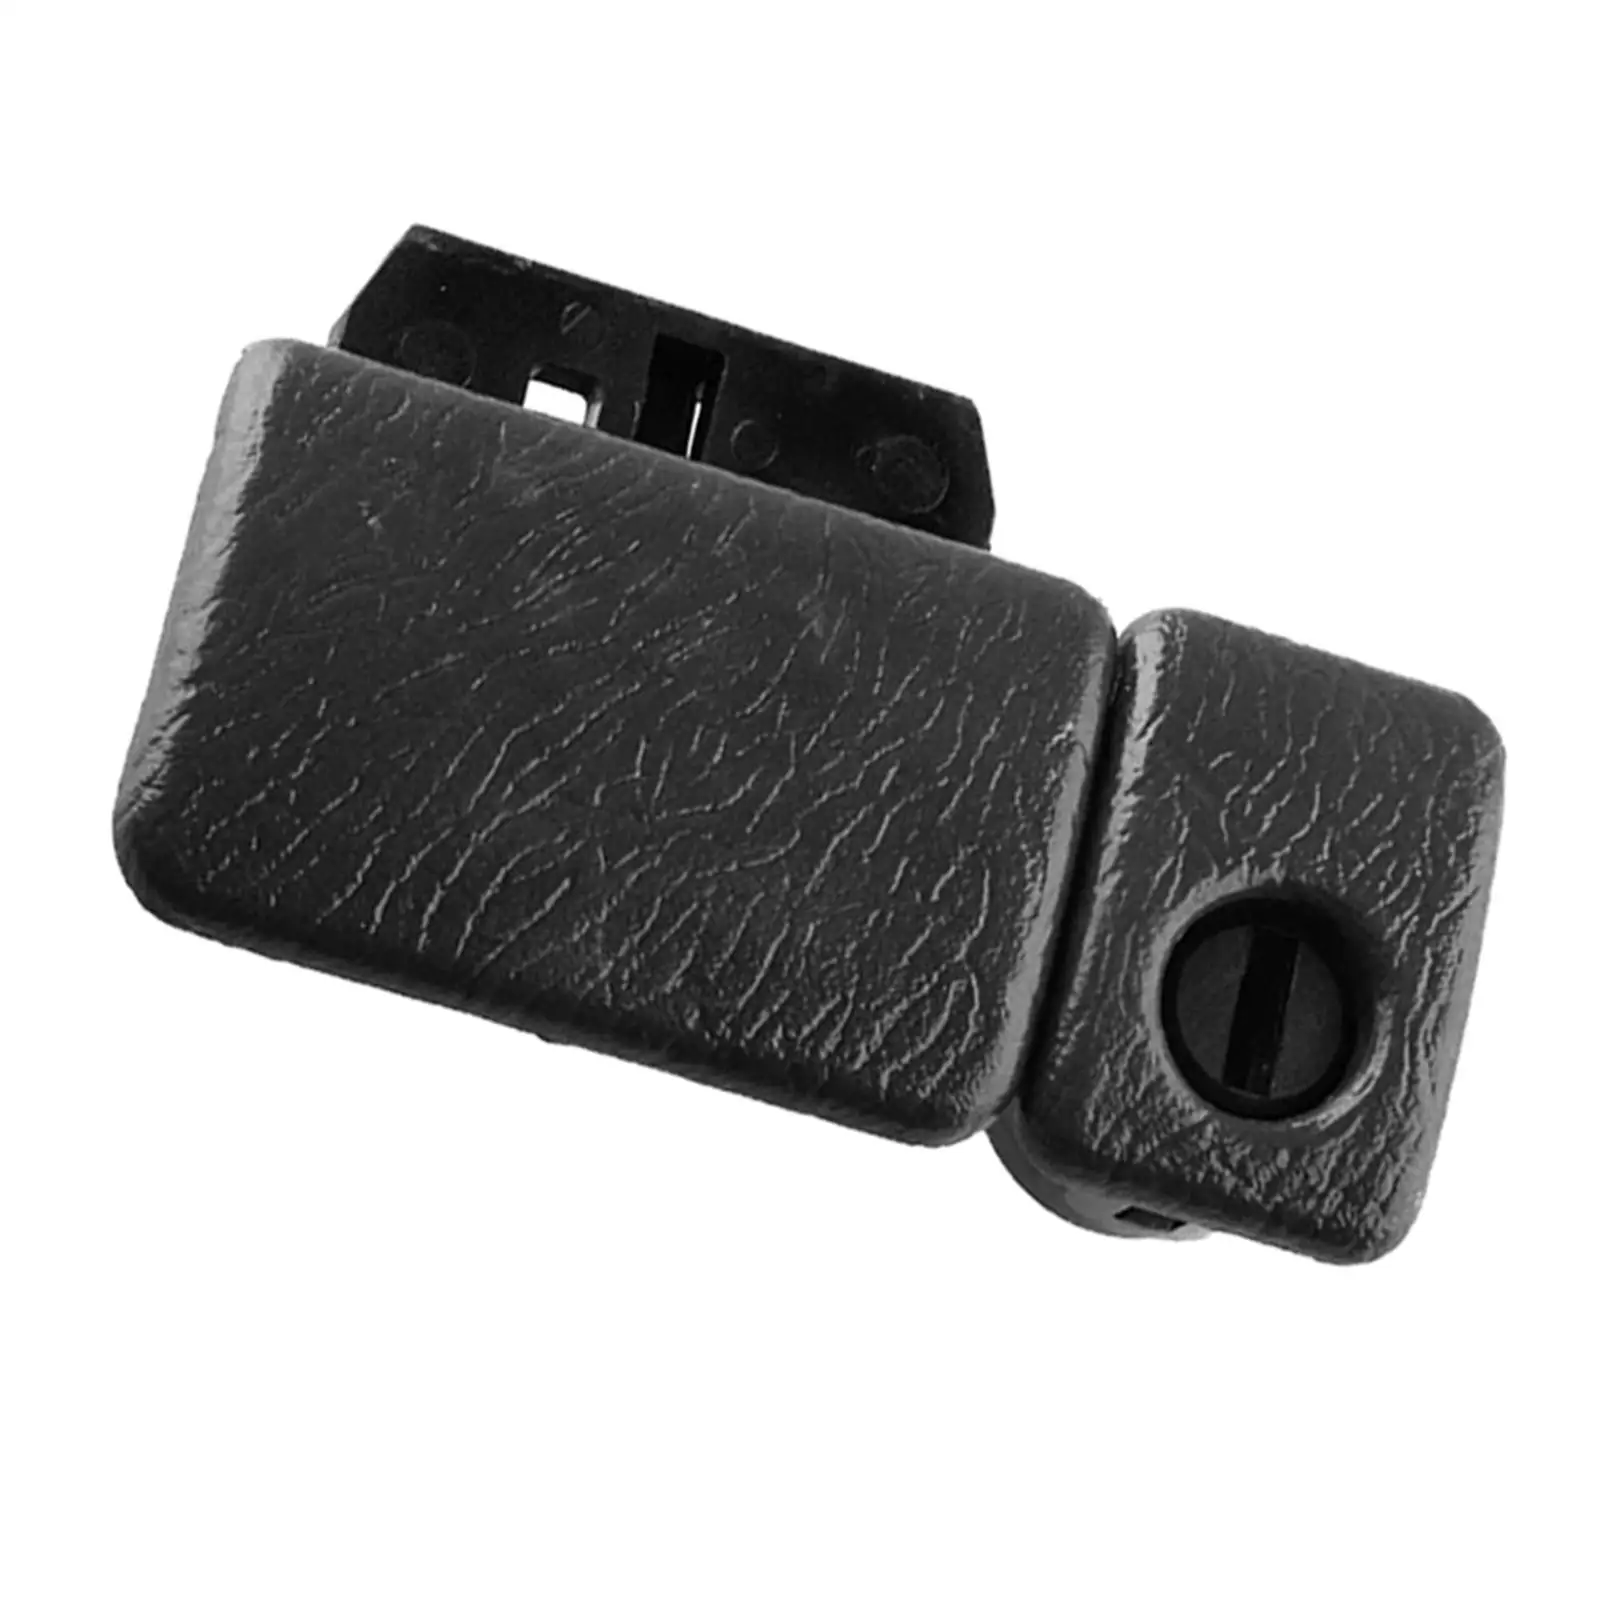 Car Glove Box Lock Latch Handle ABS Plastic Replacement Black for Suzuki Jimny Vitara Grand Vitara Easy to Install Premium